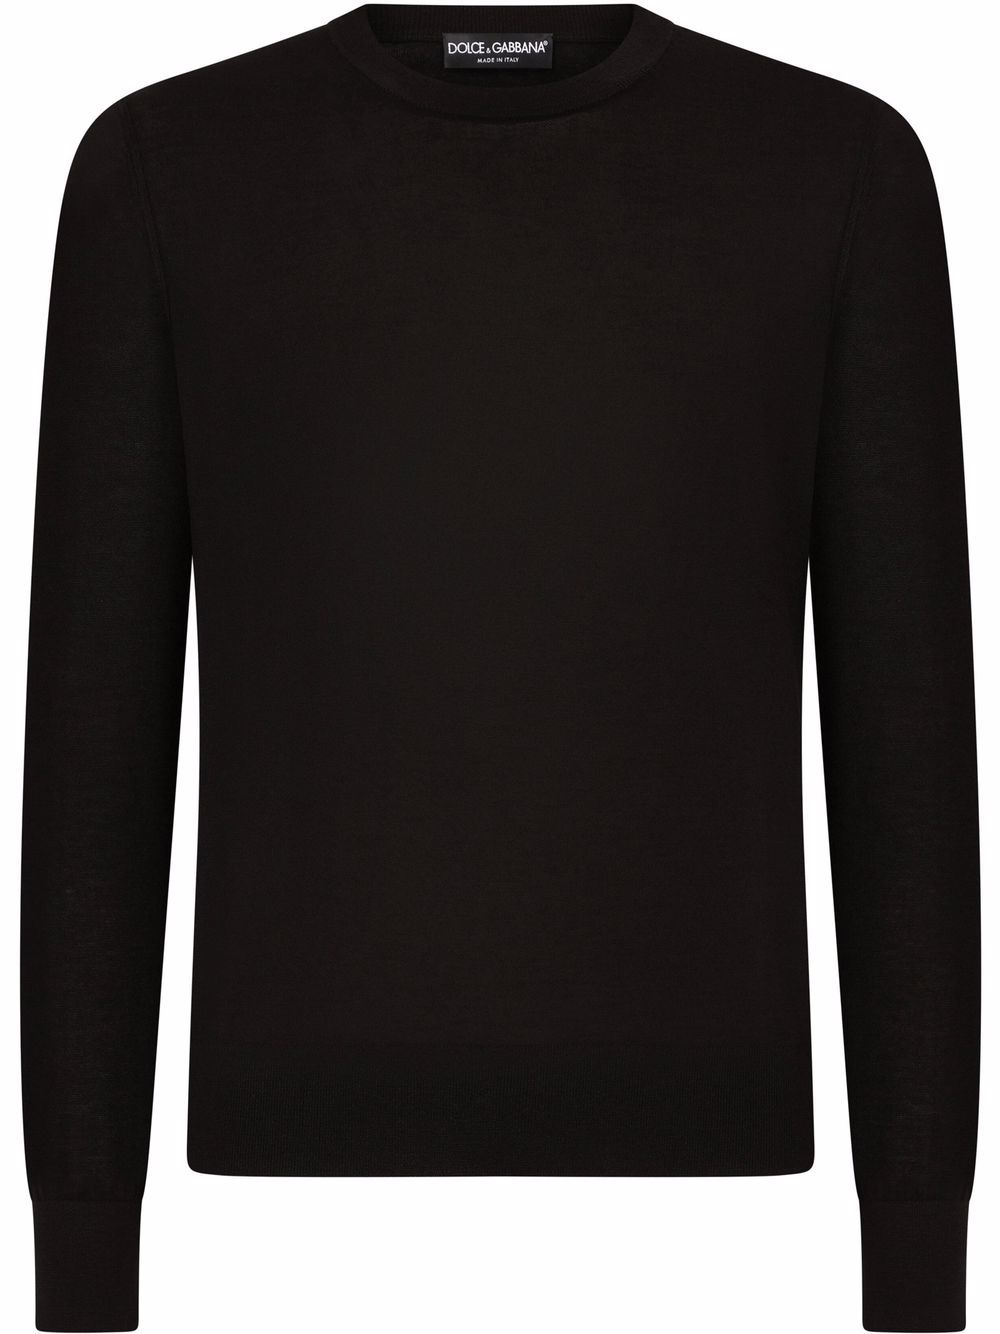 Image 1 of Dolce & Gabbana cashmere crew neck jumper